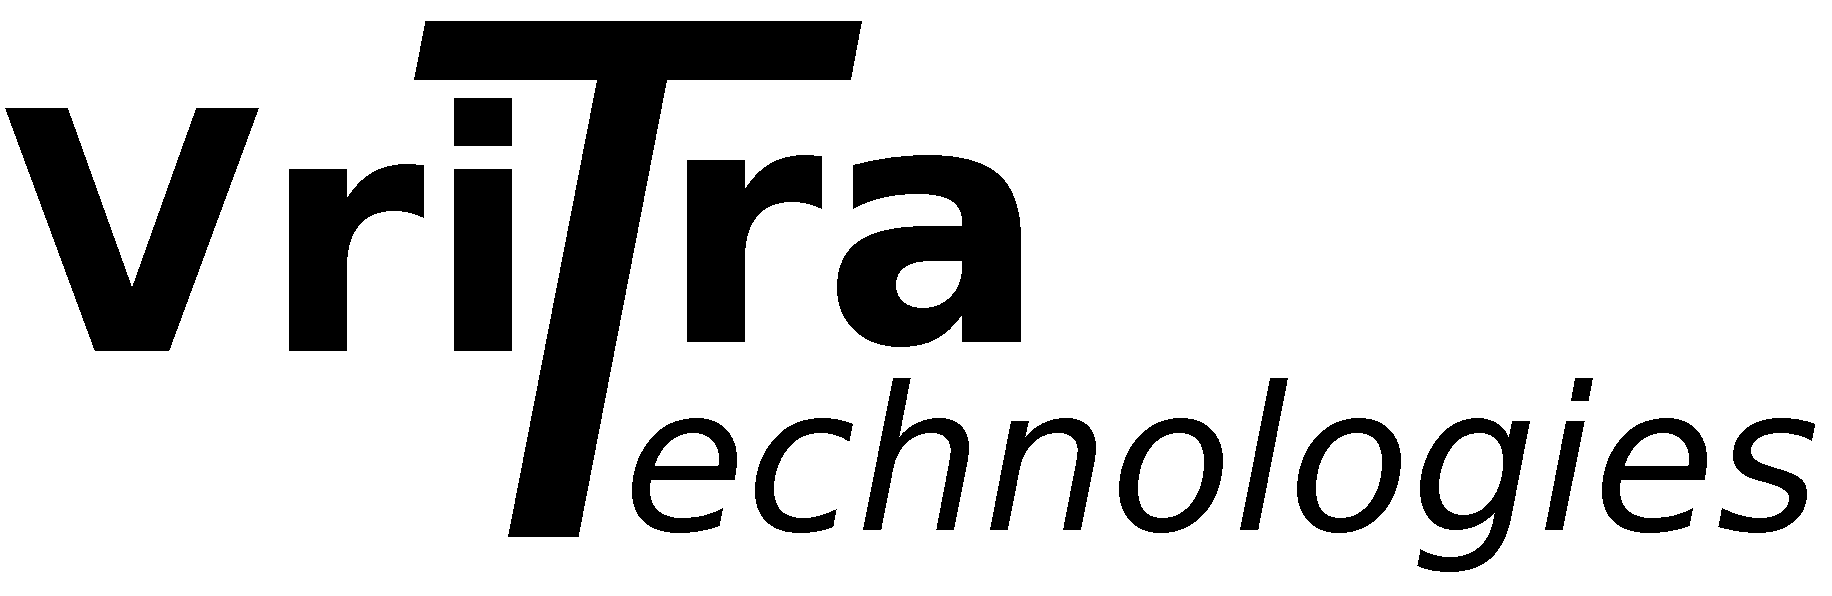 Vritra Technologies